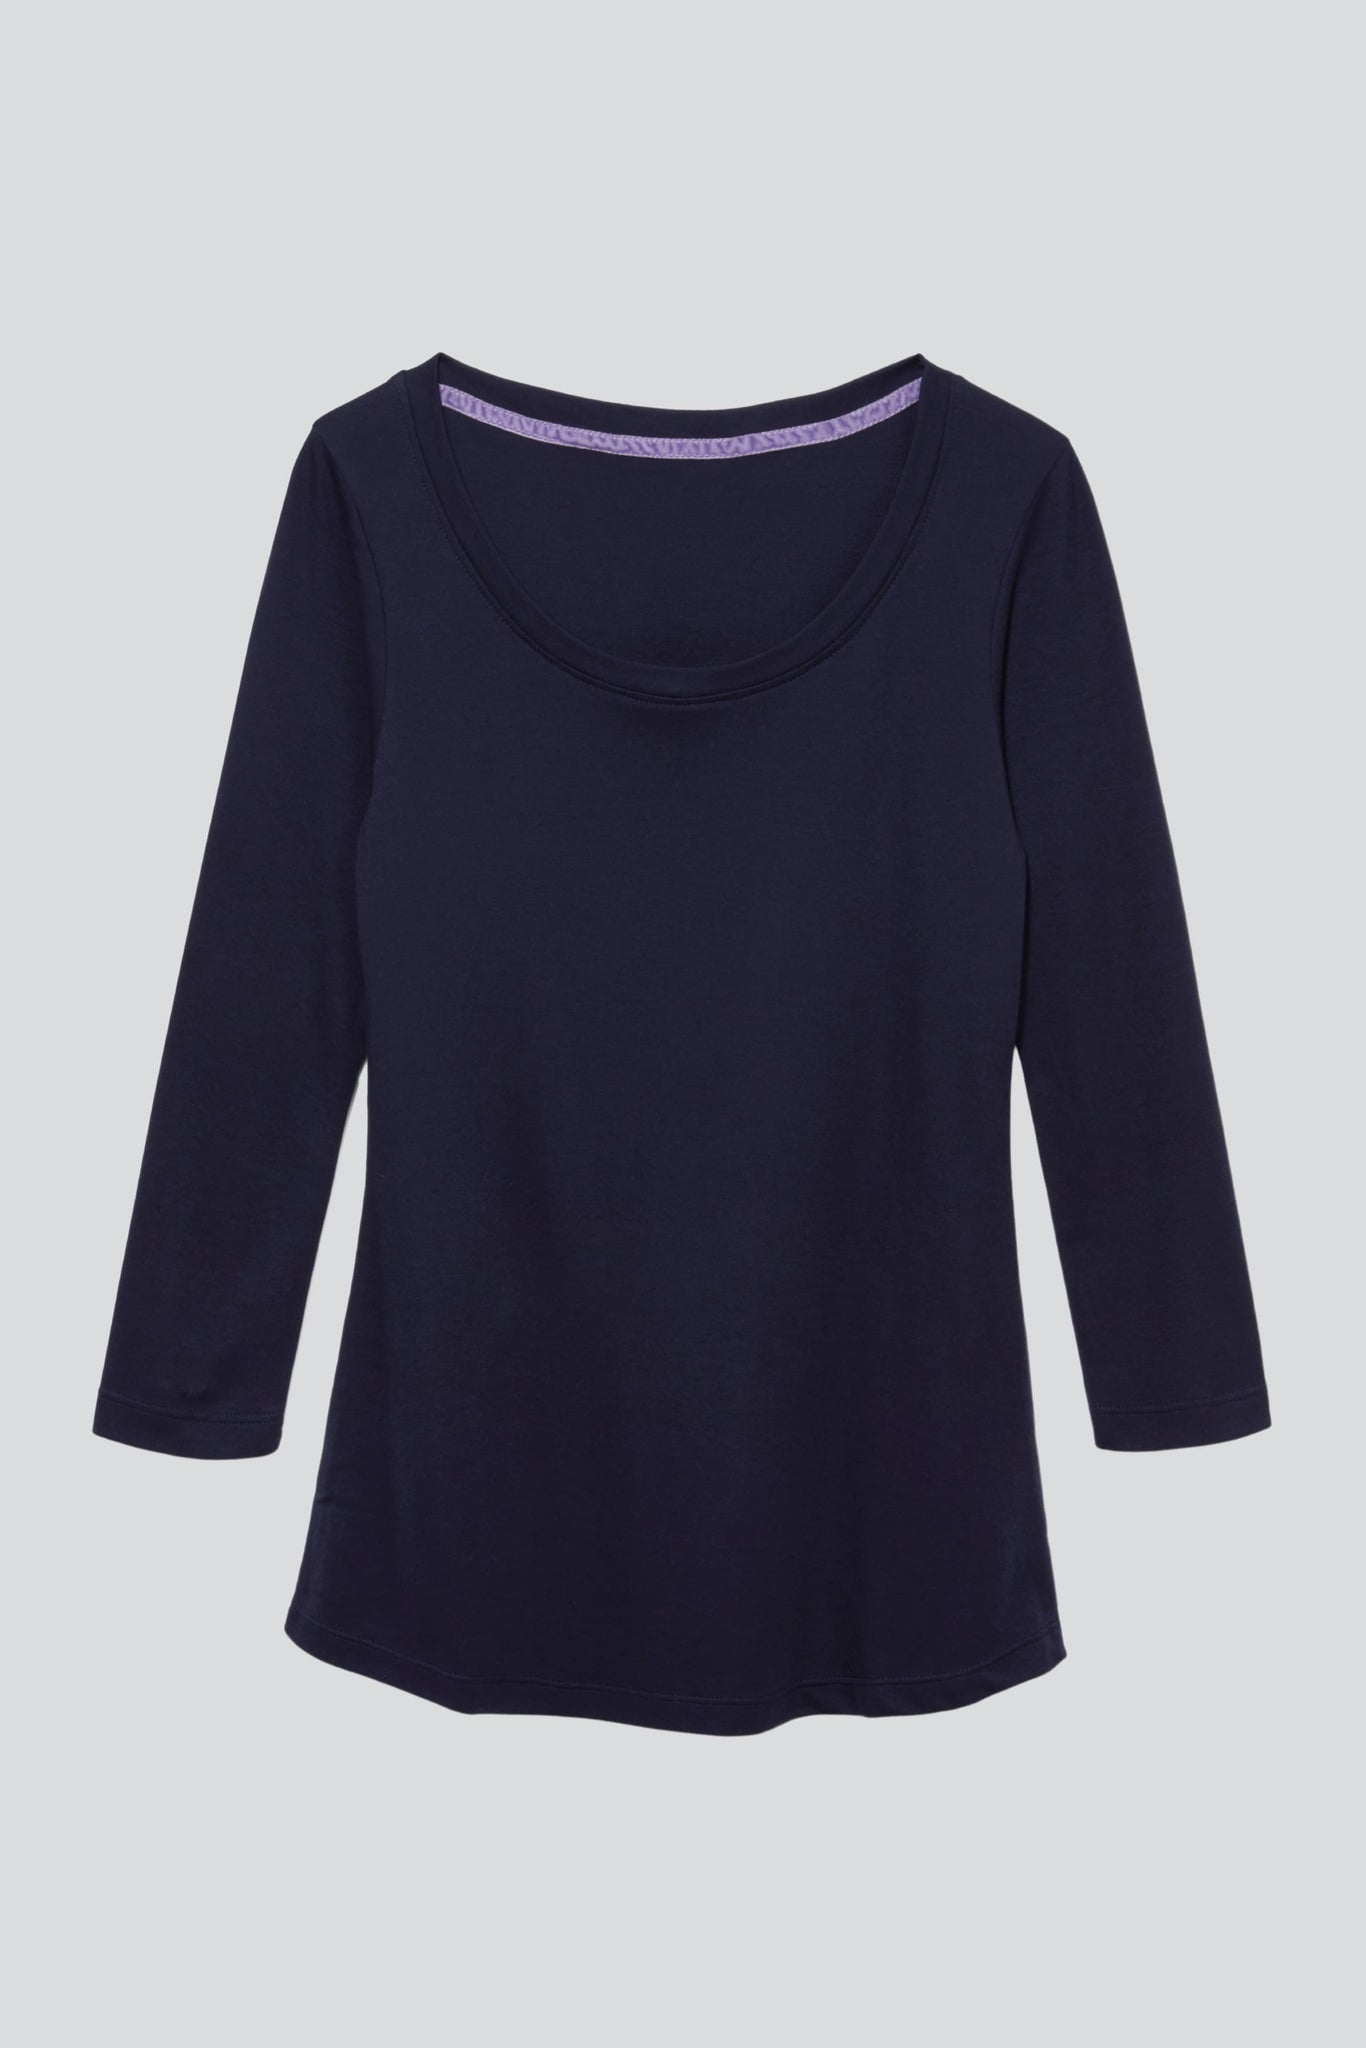 Lavender Hill Clothing Co. Black Scoop Neck T-Shirt - Meghan's Mirror